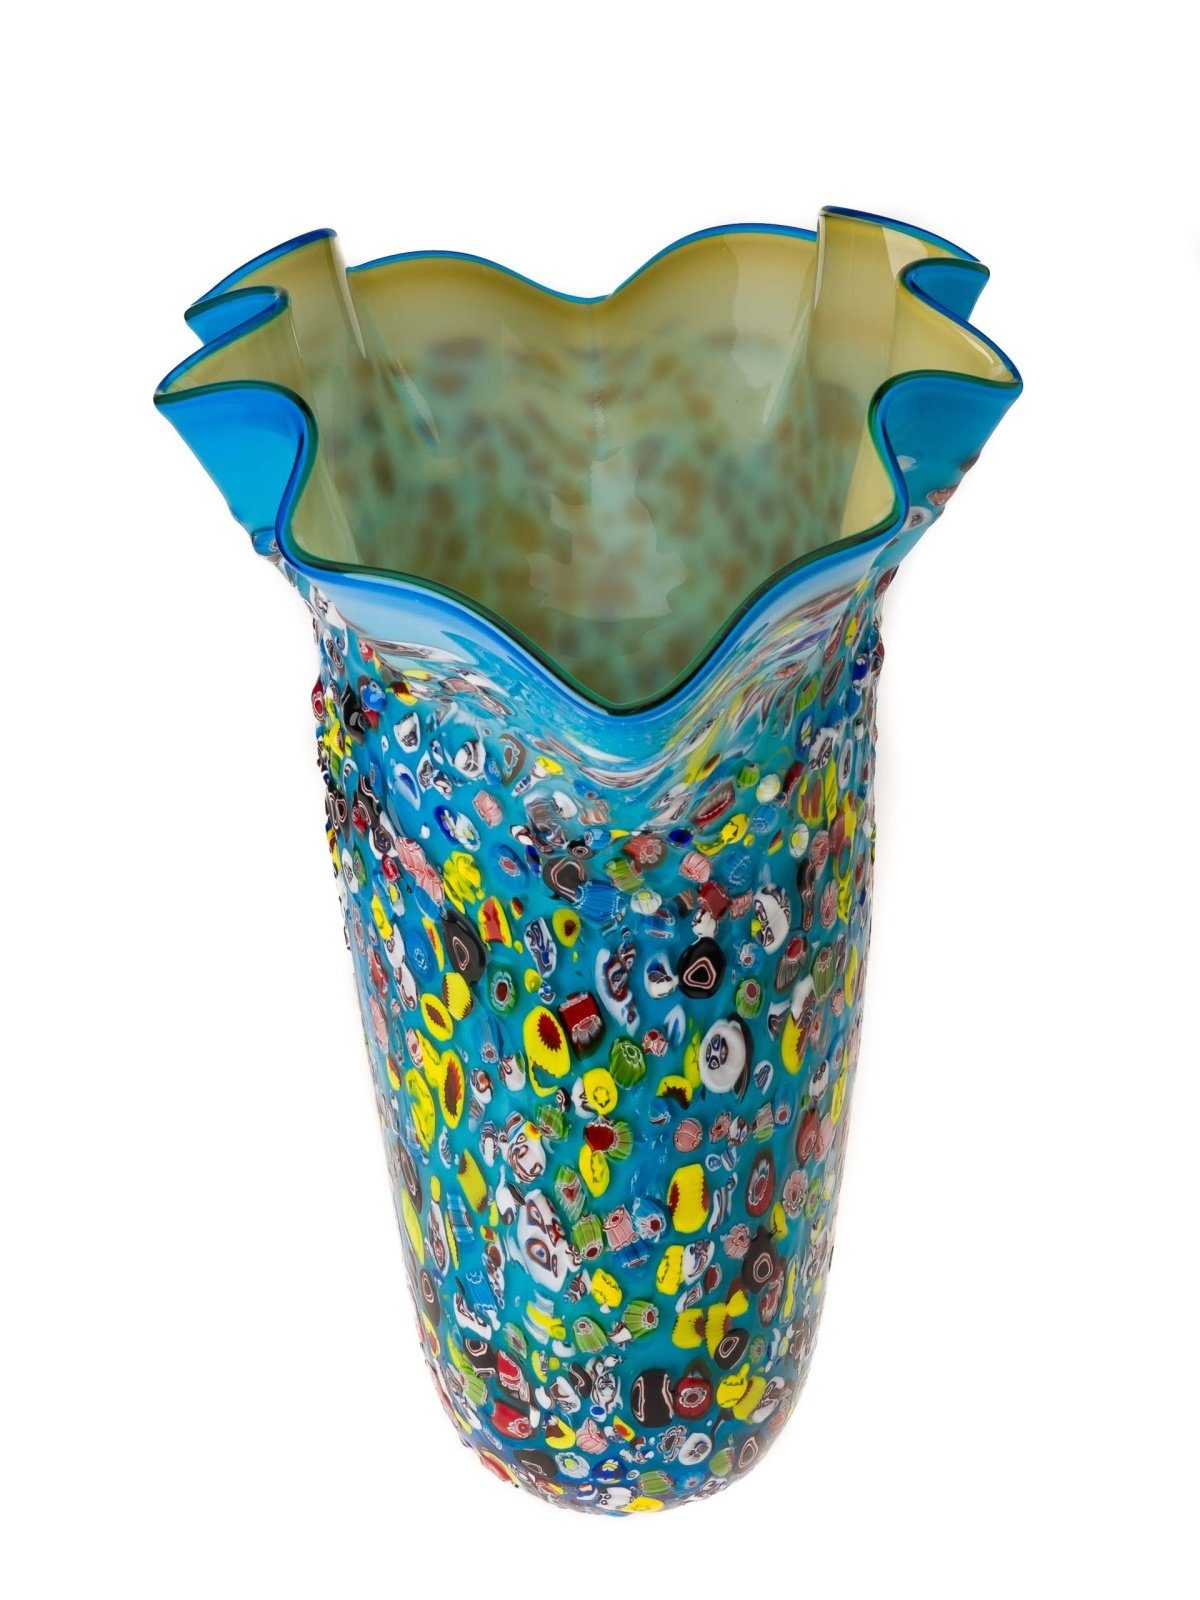 Aubaho Tischvase Glasvase Glas Vase im Tischvase Stil antik Italien 42cm schwere Murano